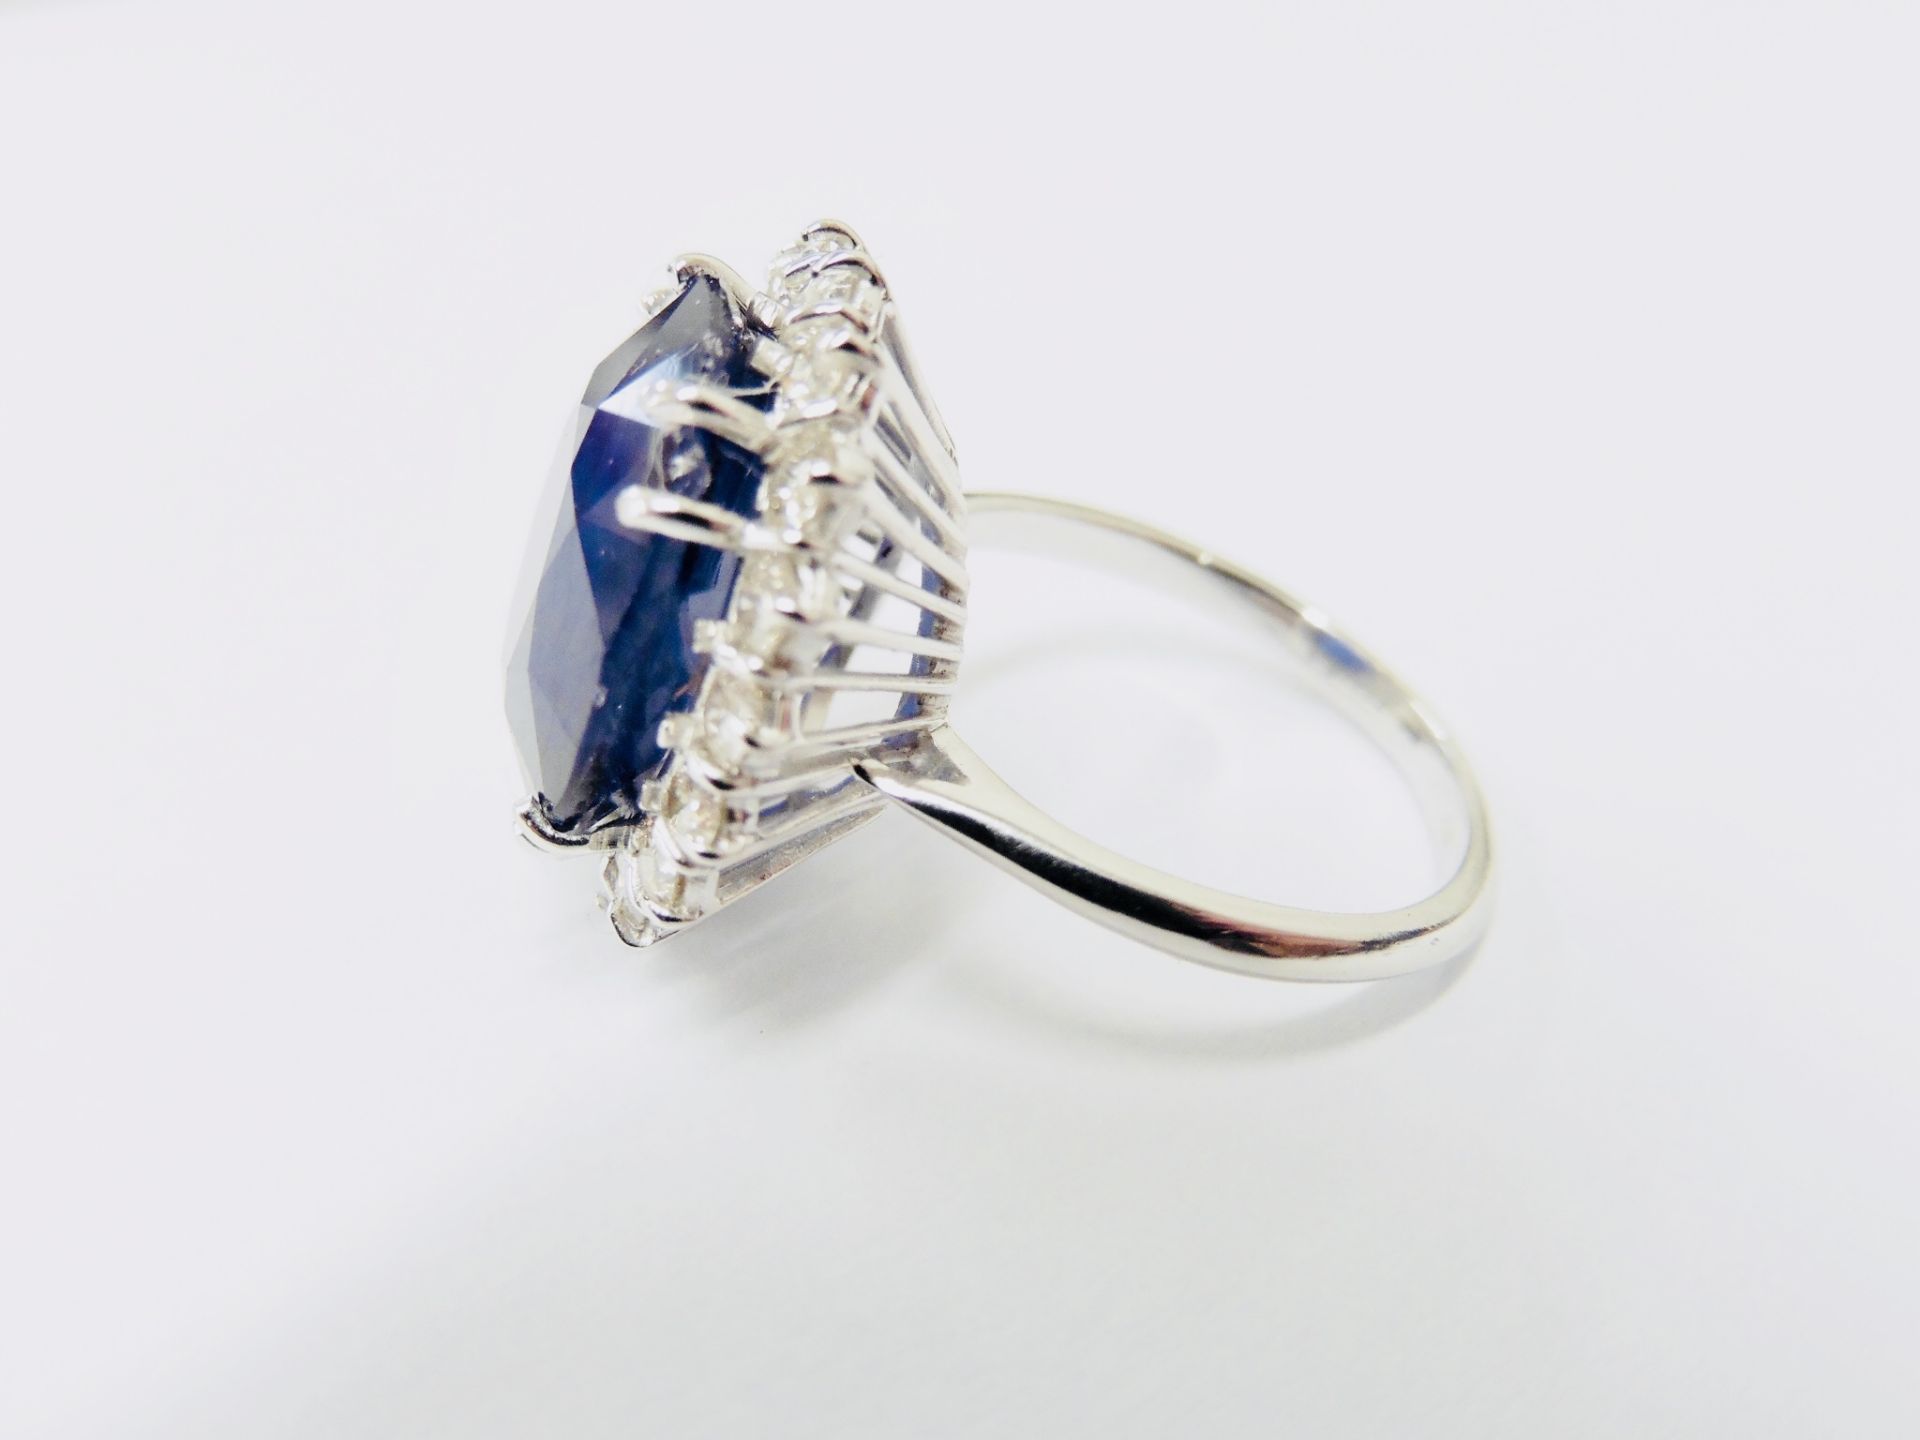 9ct Sapphire Diamond cluster ring,9ct sapphire natural(treated),1.30ct brilliant cut diamonds si2 - Image 3 of 5